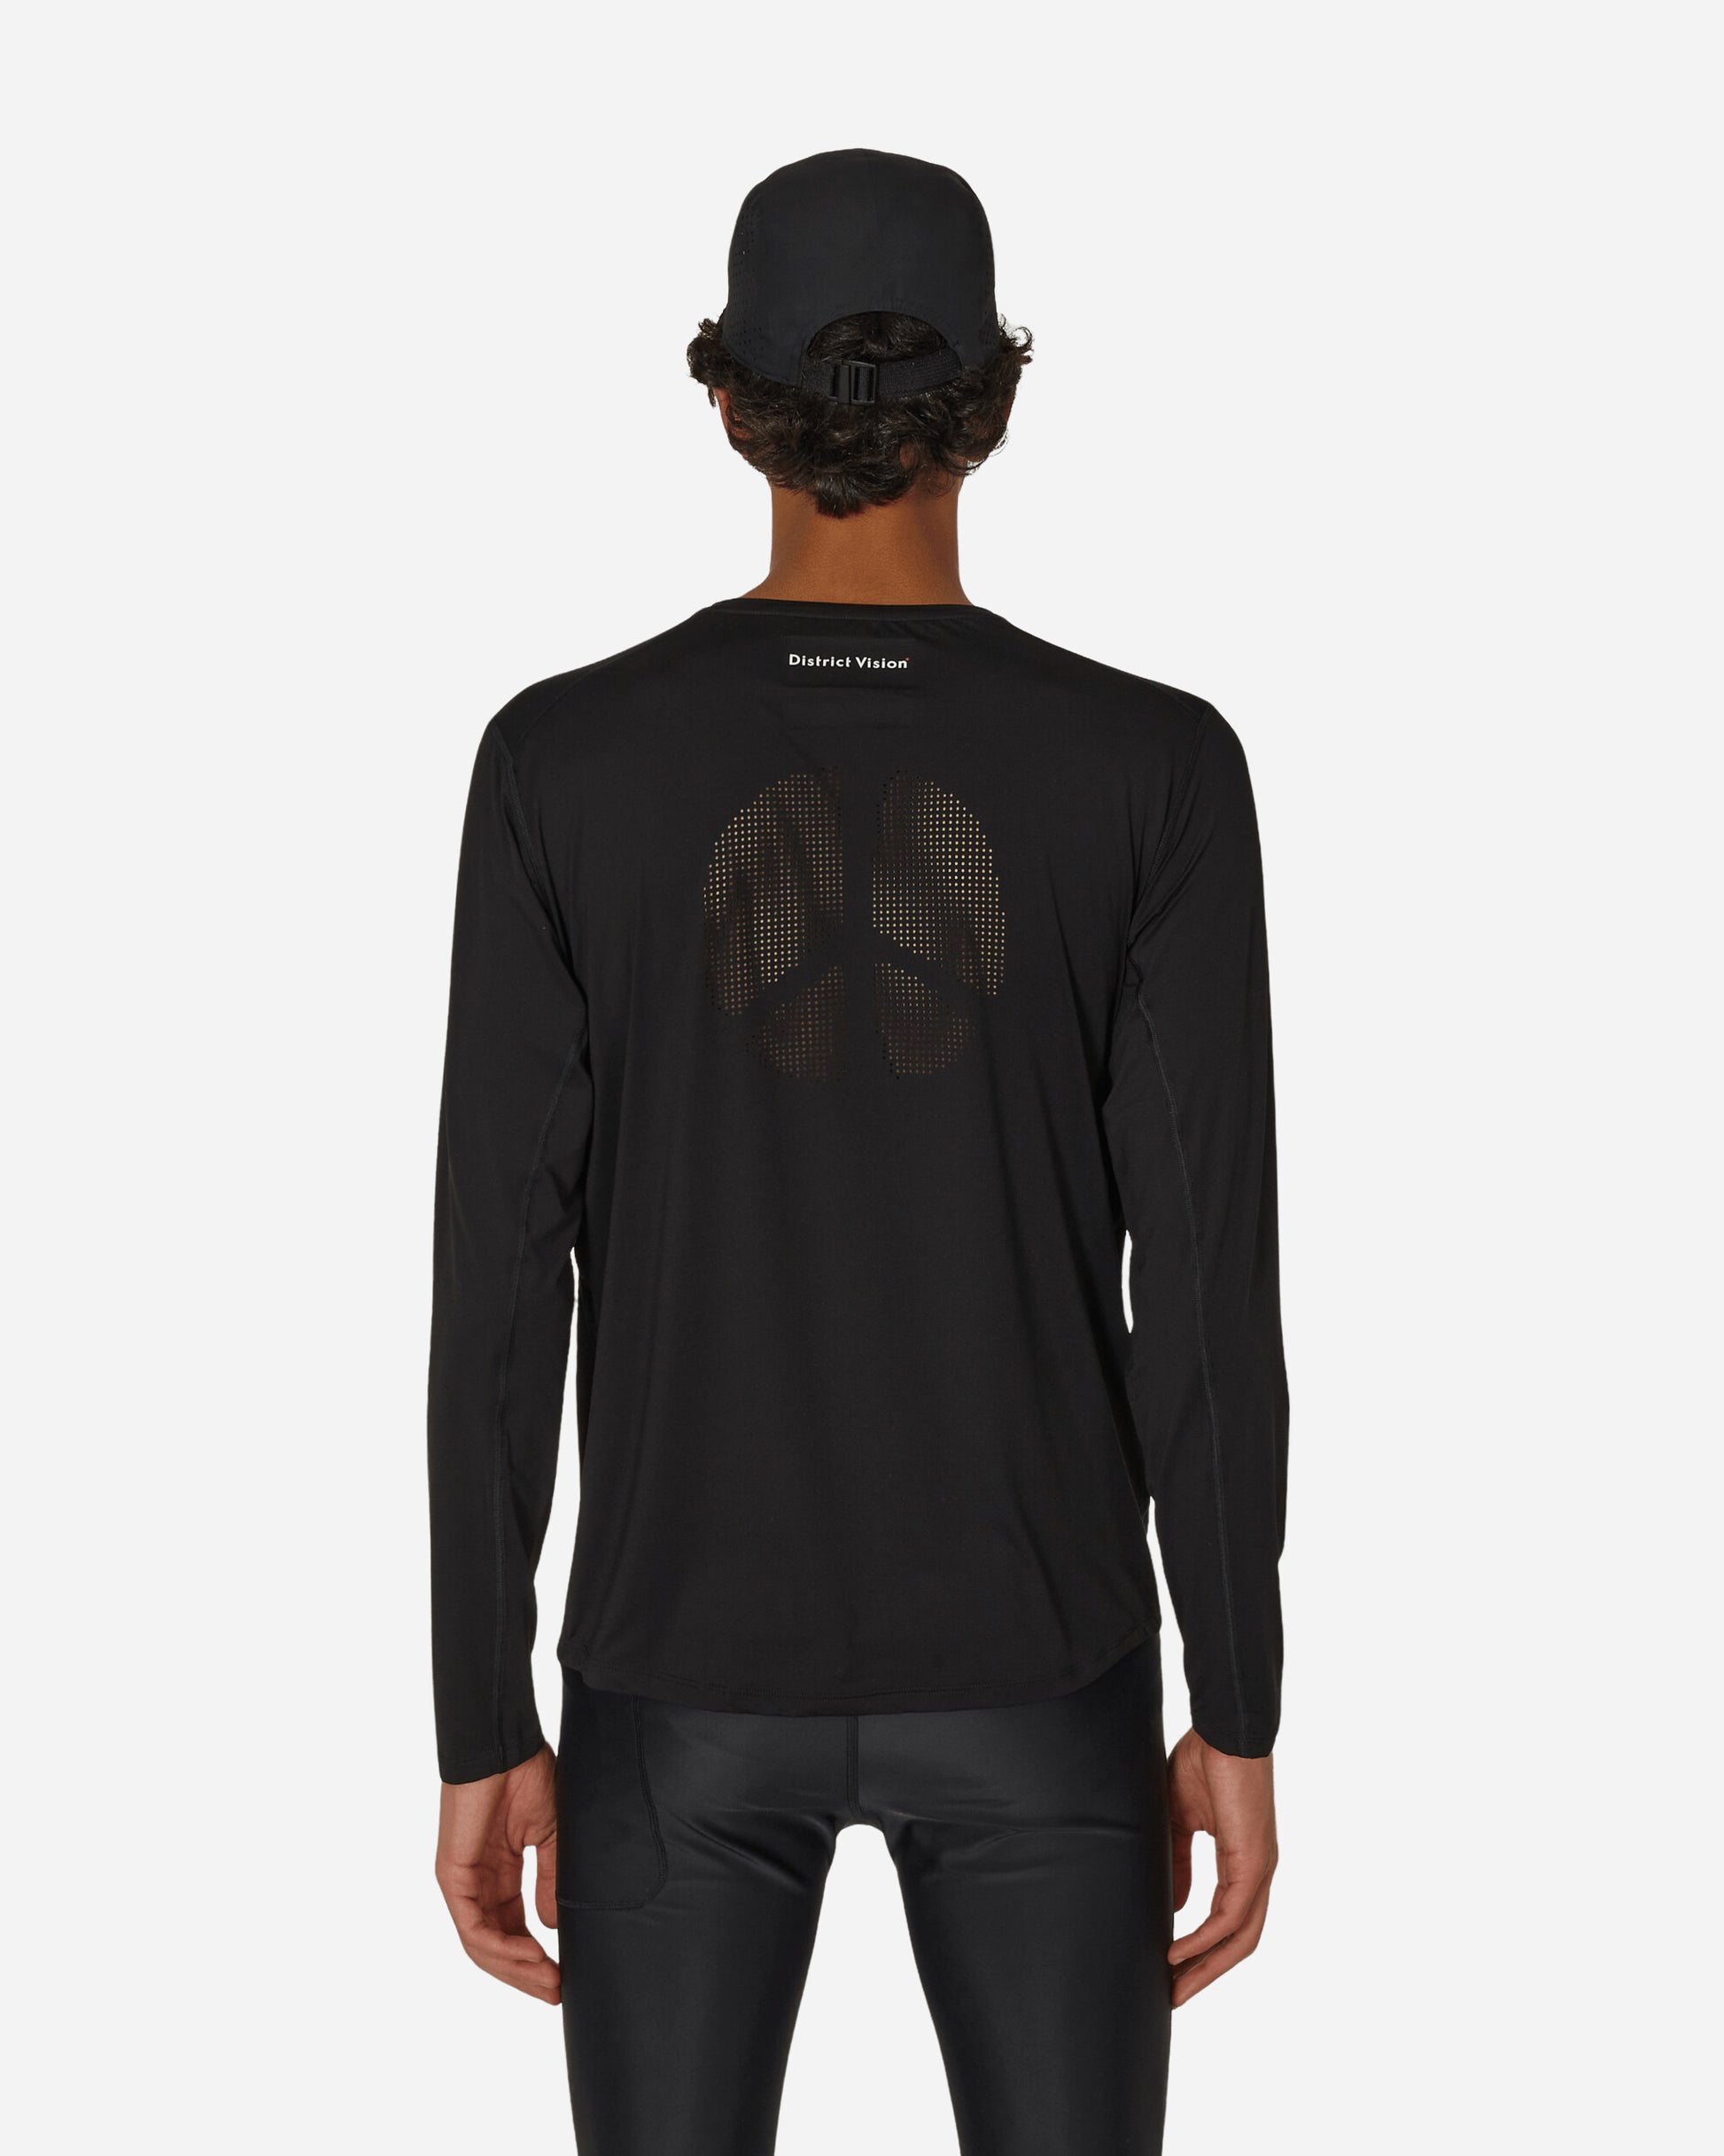 District Vision Ultralight Aloe Long Sleeve Tee Black T-Shirts Longsleeve DV0019 B